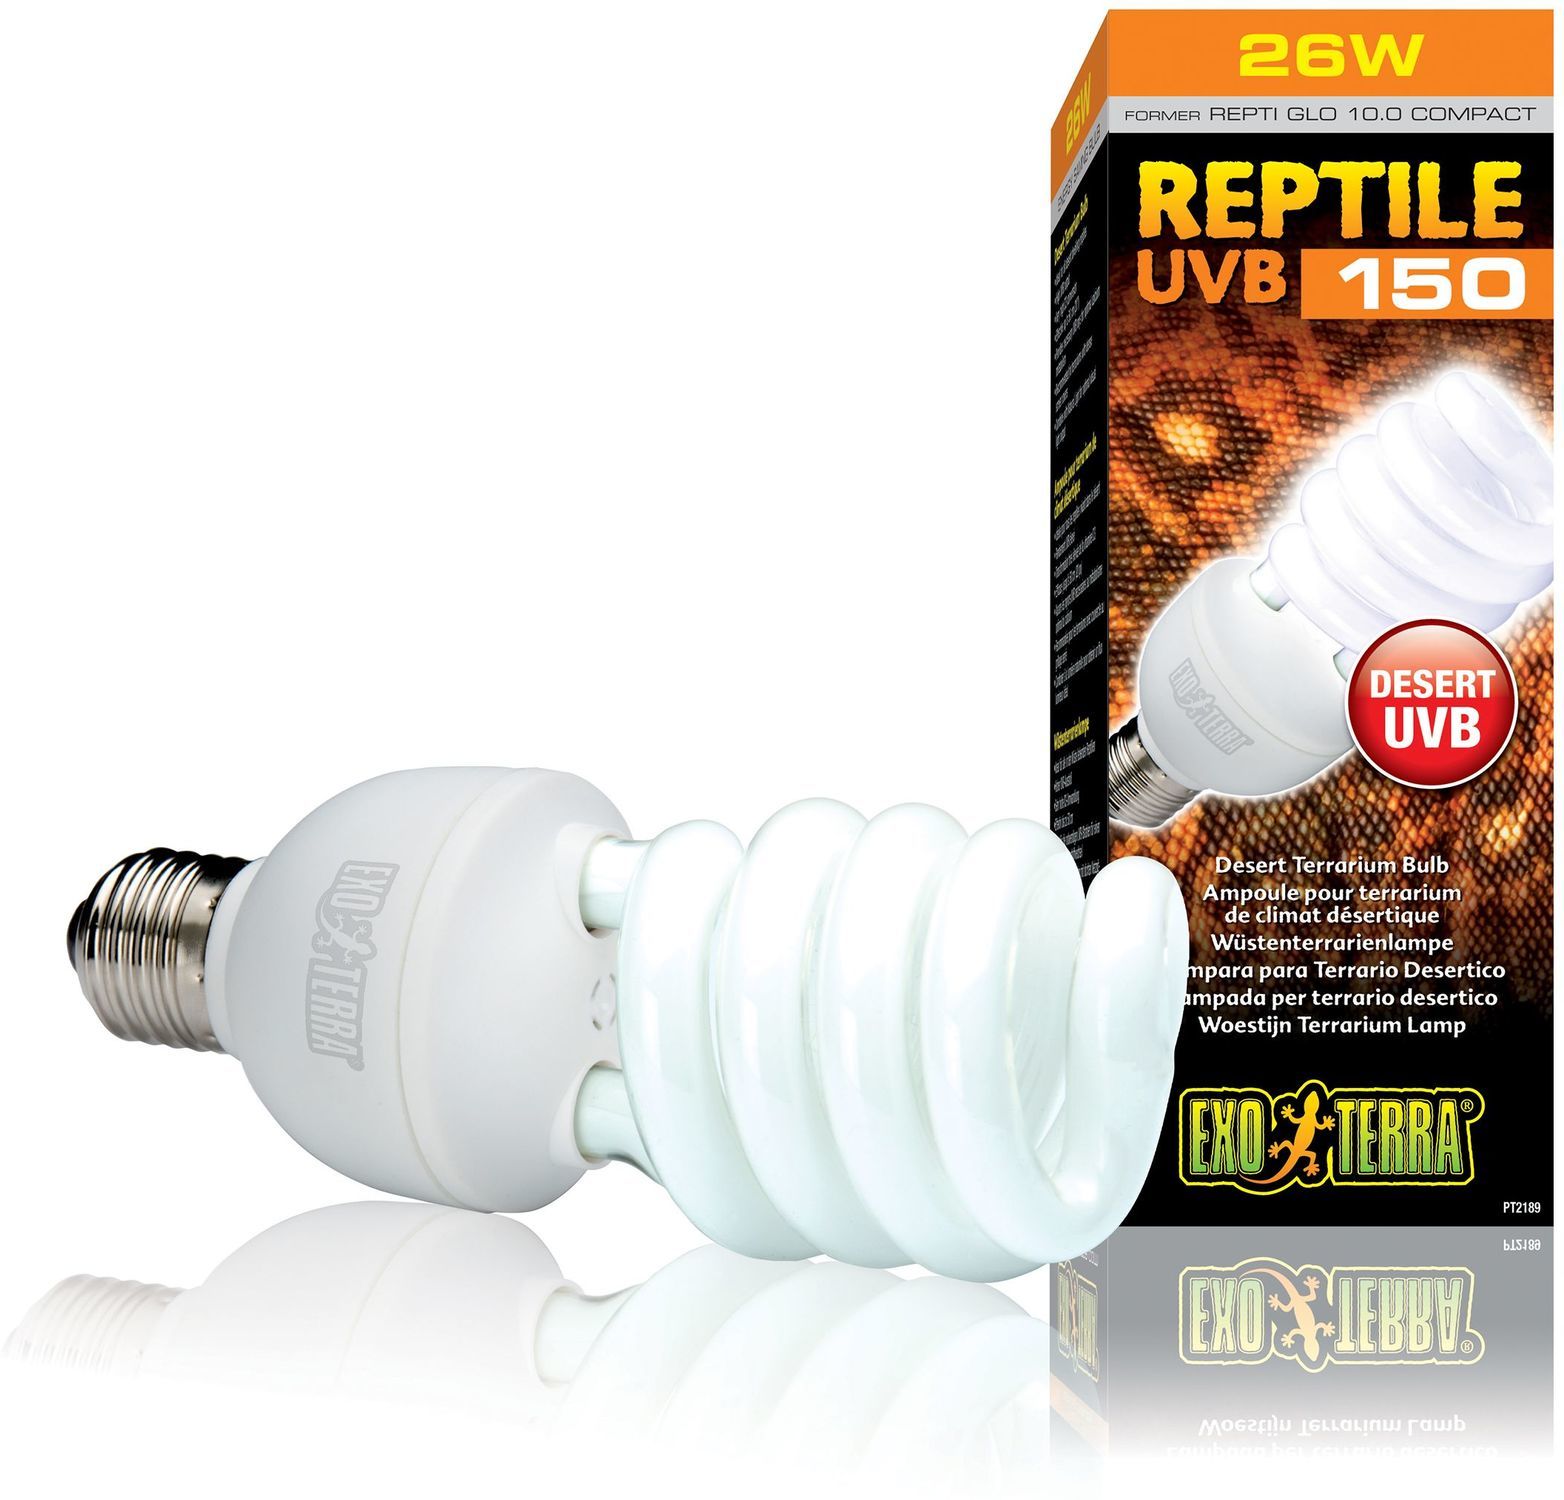 Exo Terra Reptile UVB 150 Desert Compact Bulb – Neon Repti Glo - zoom